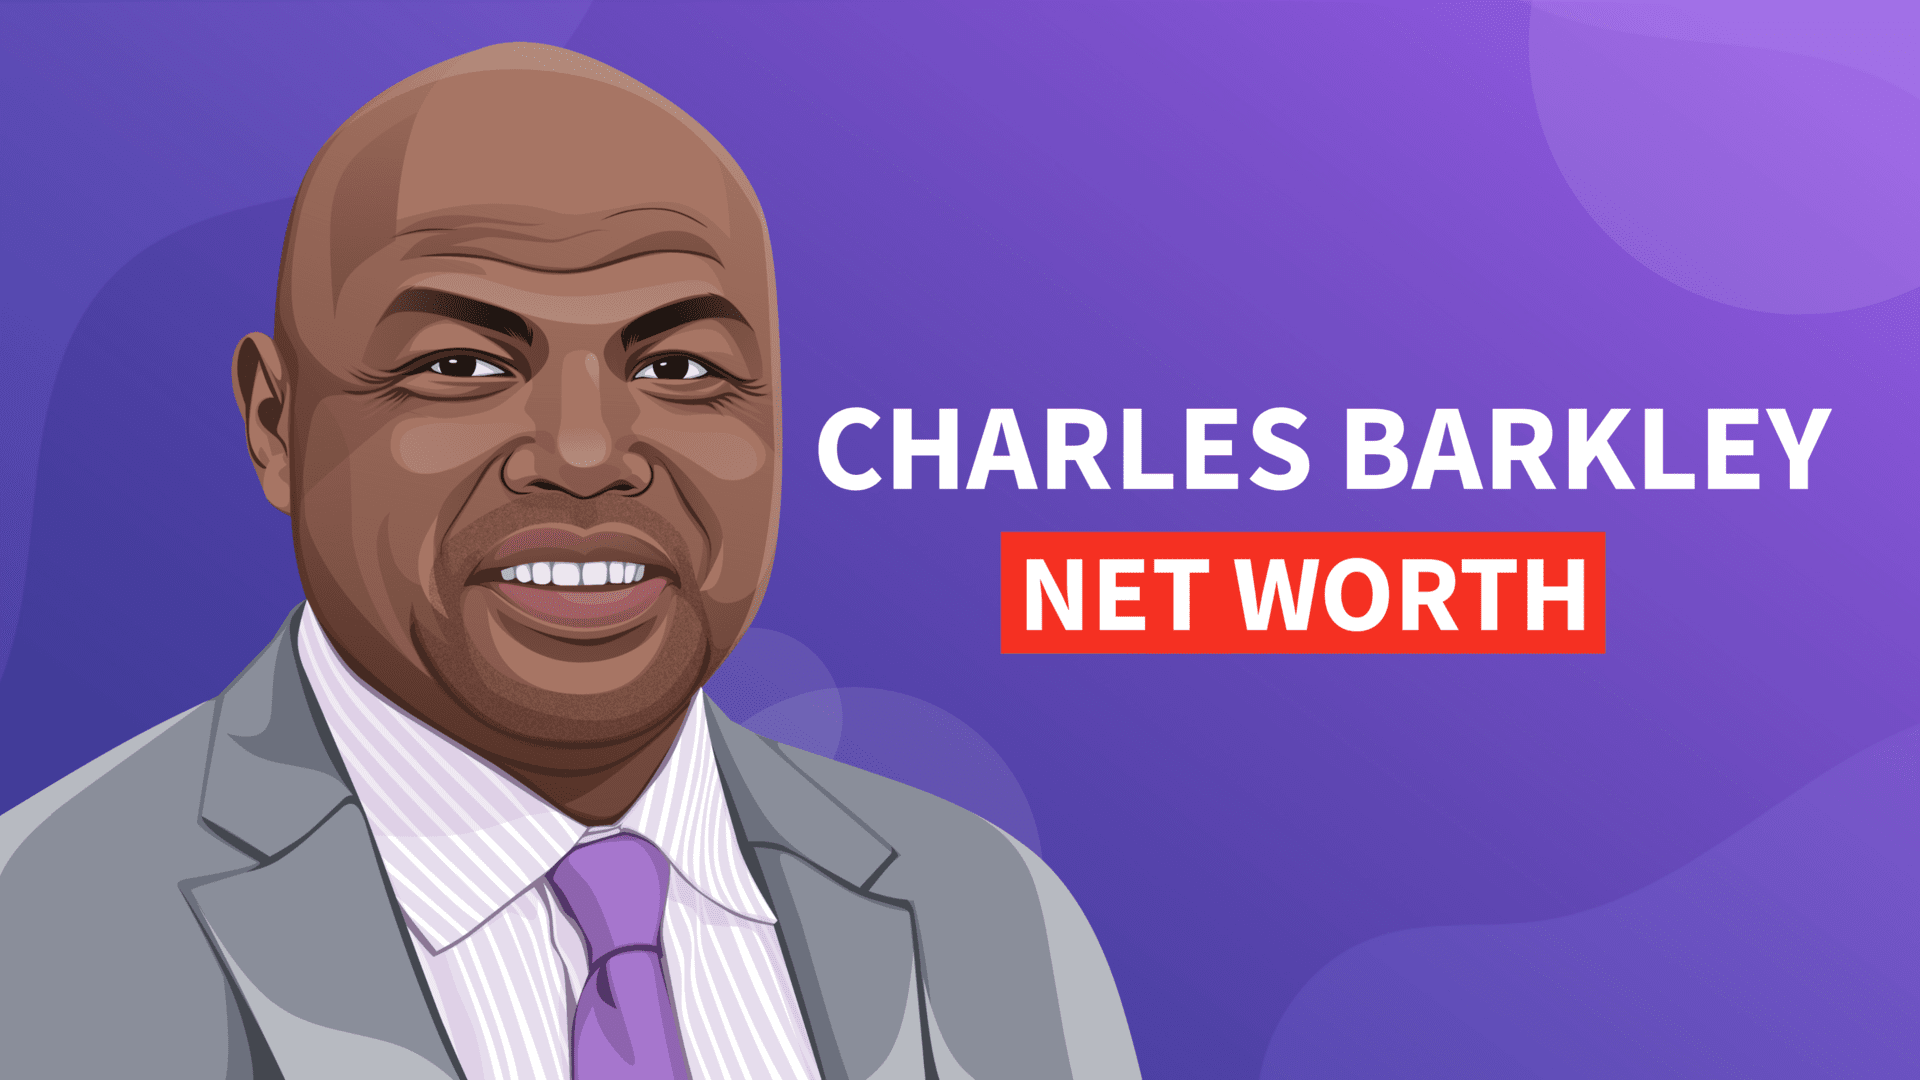 Charles Barkley net worth